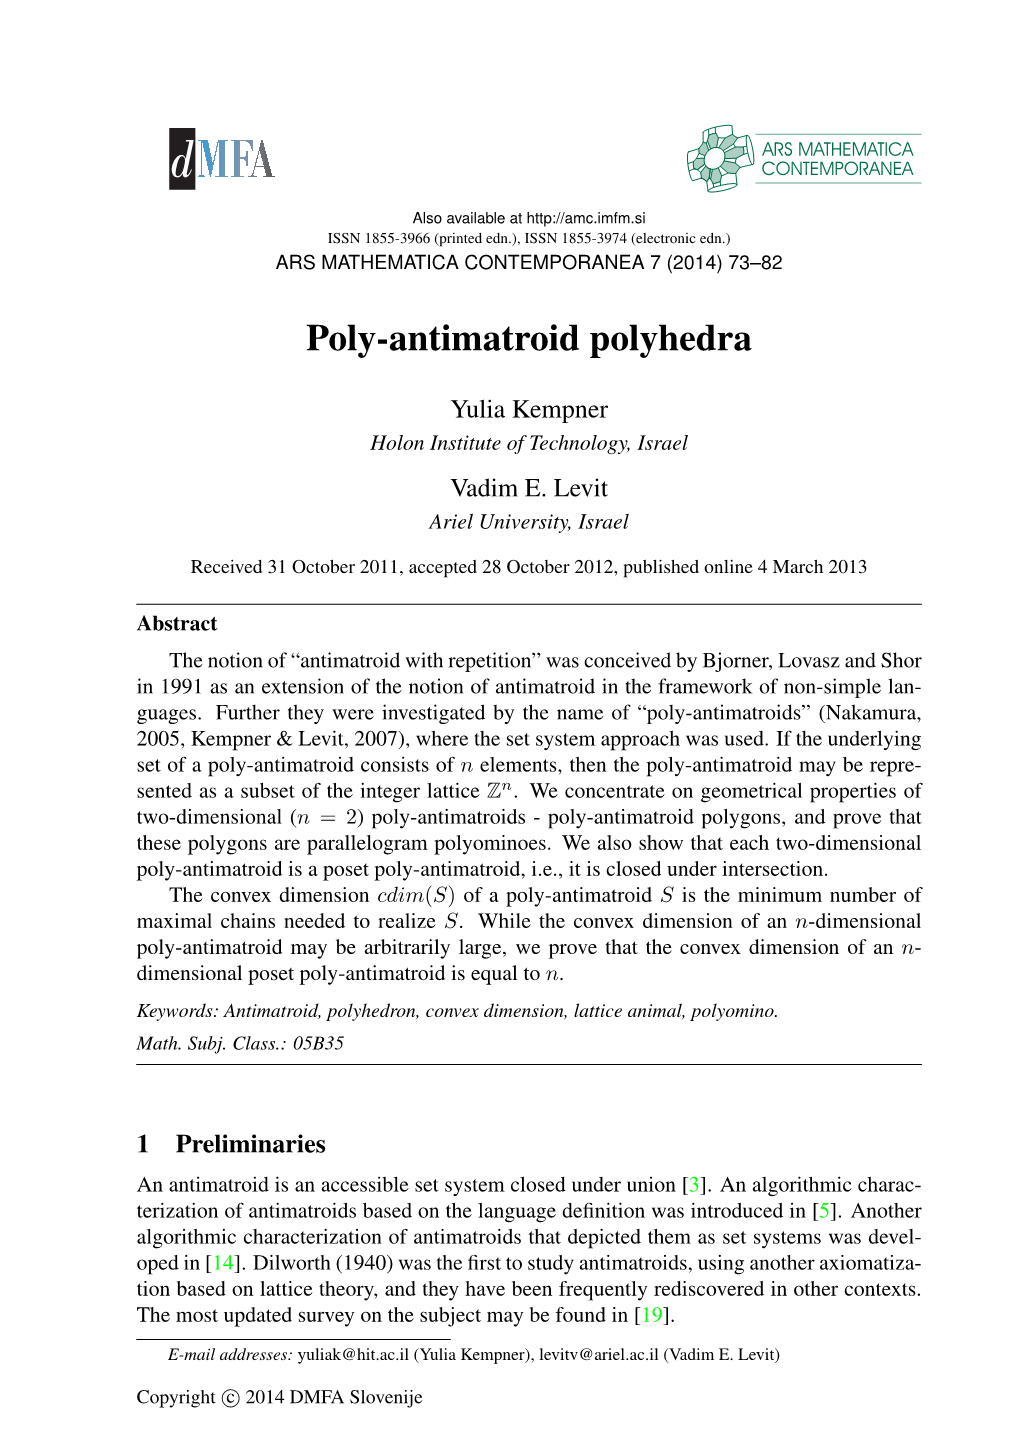 Poly-Antimatroid Polyhedra